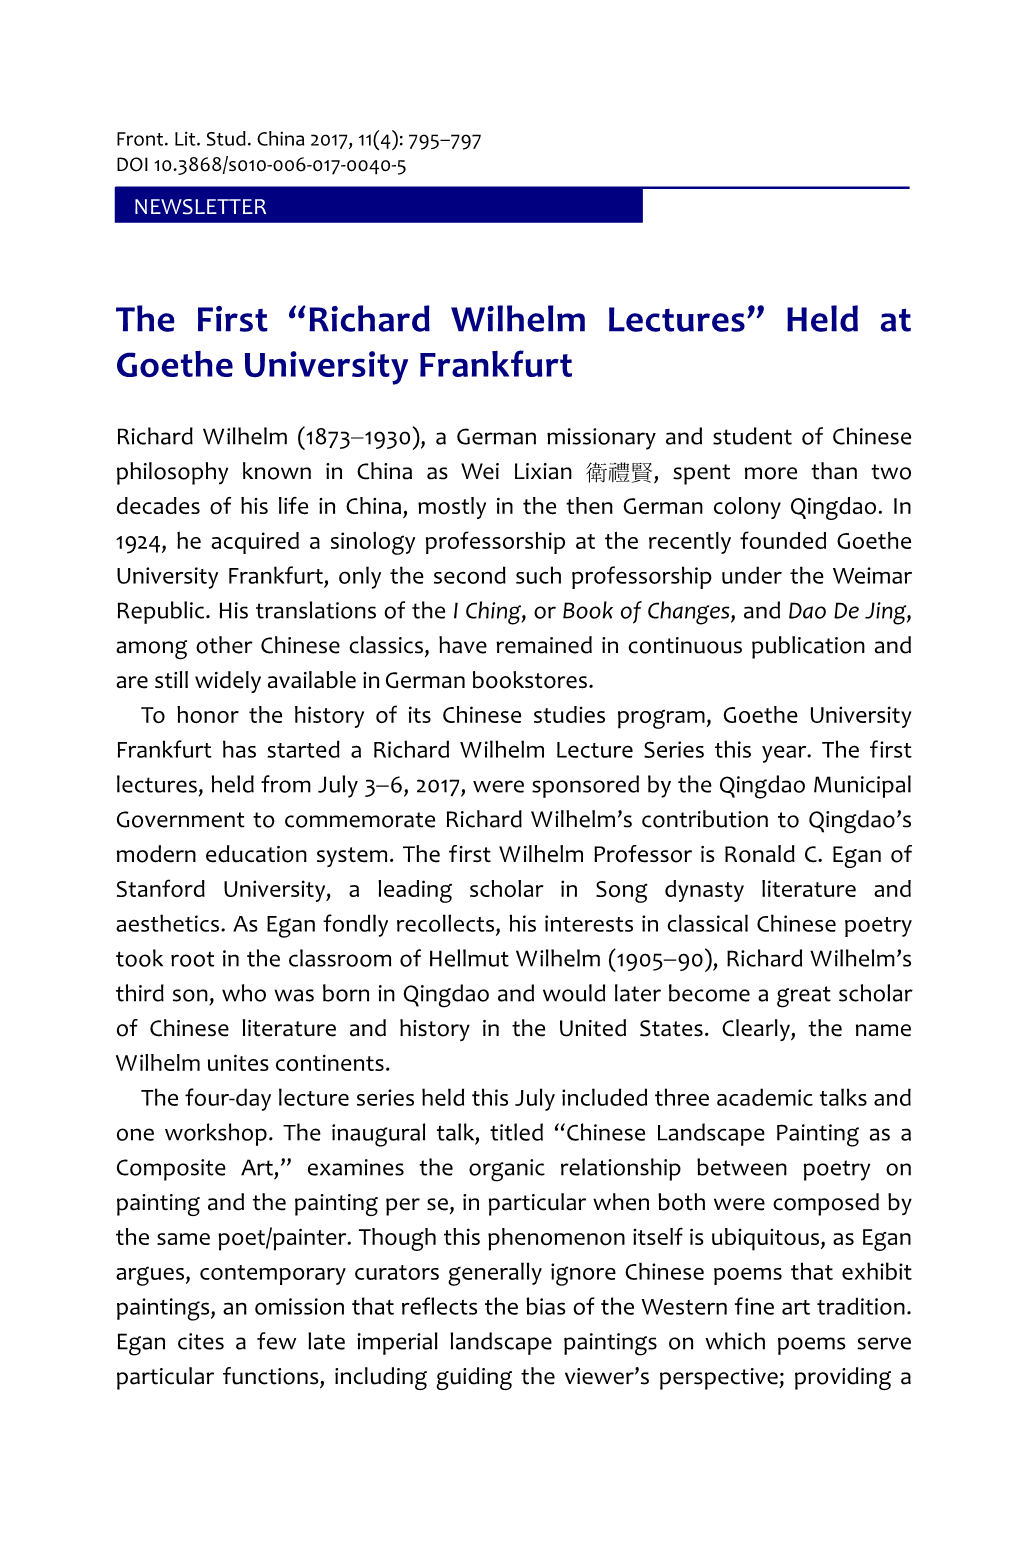 Richard Wilhelm Lectures” Held at Goethe University Frankfurt